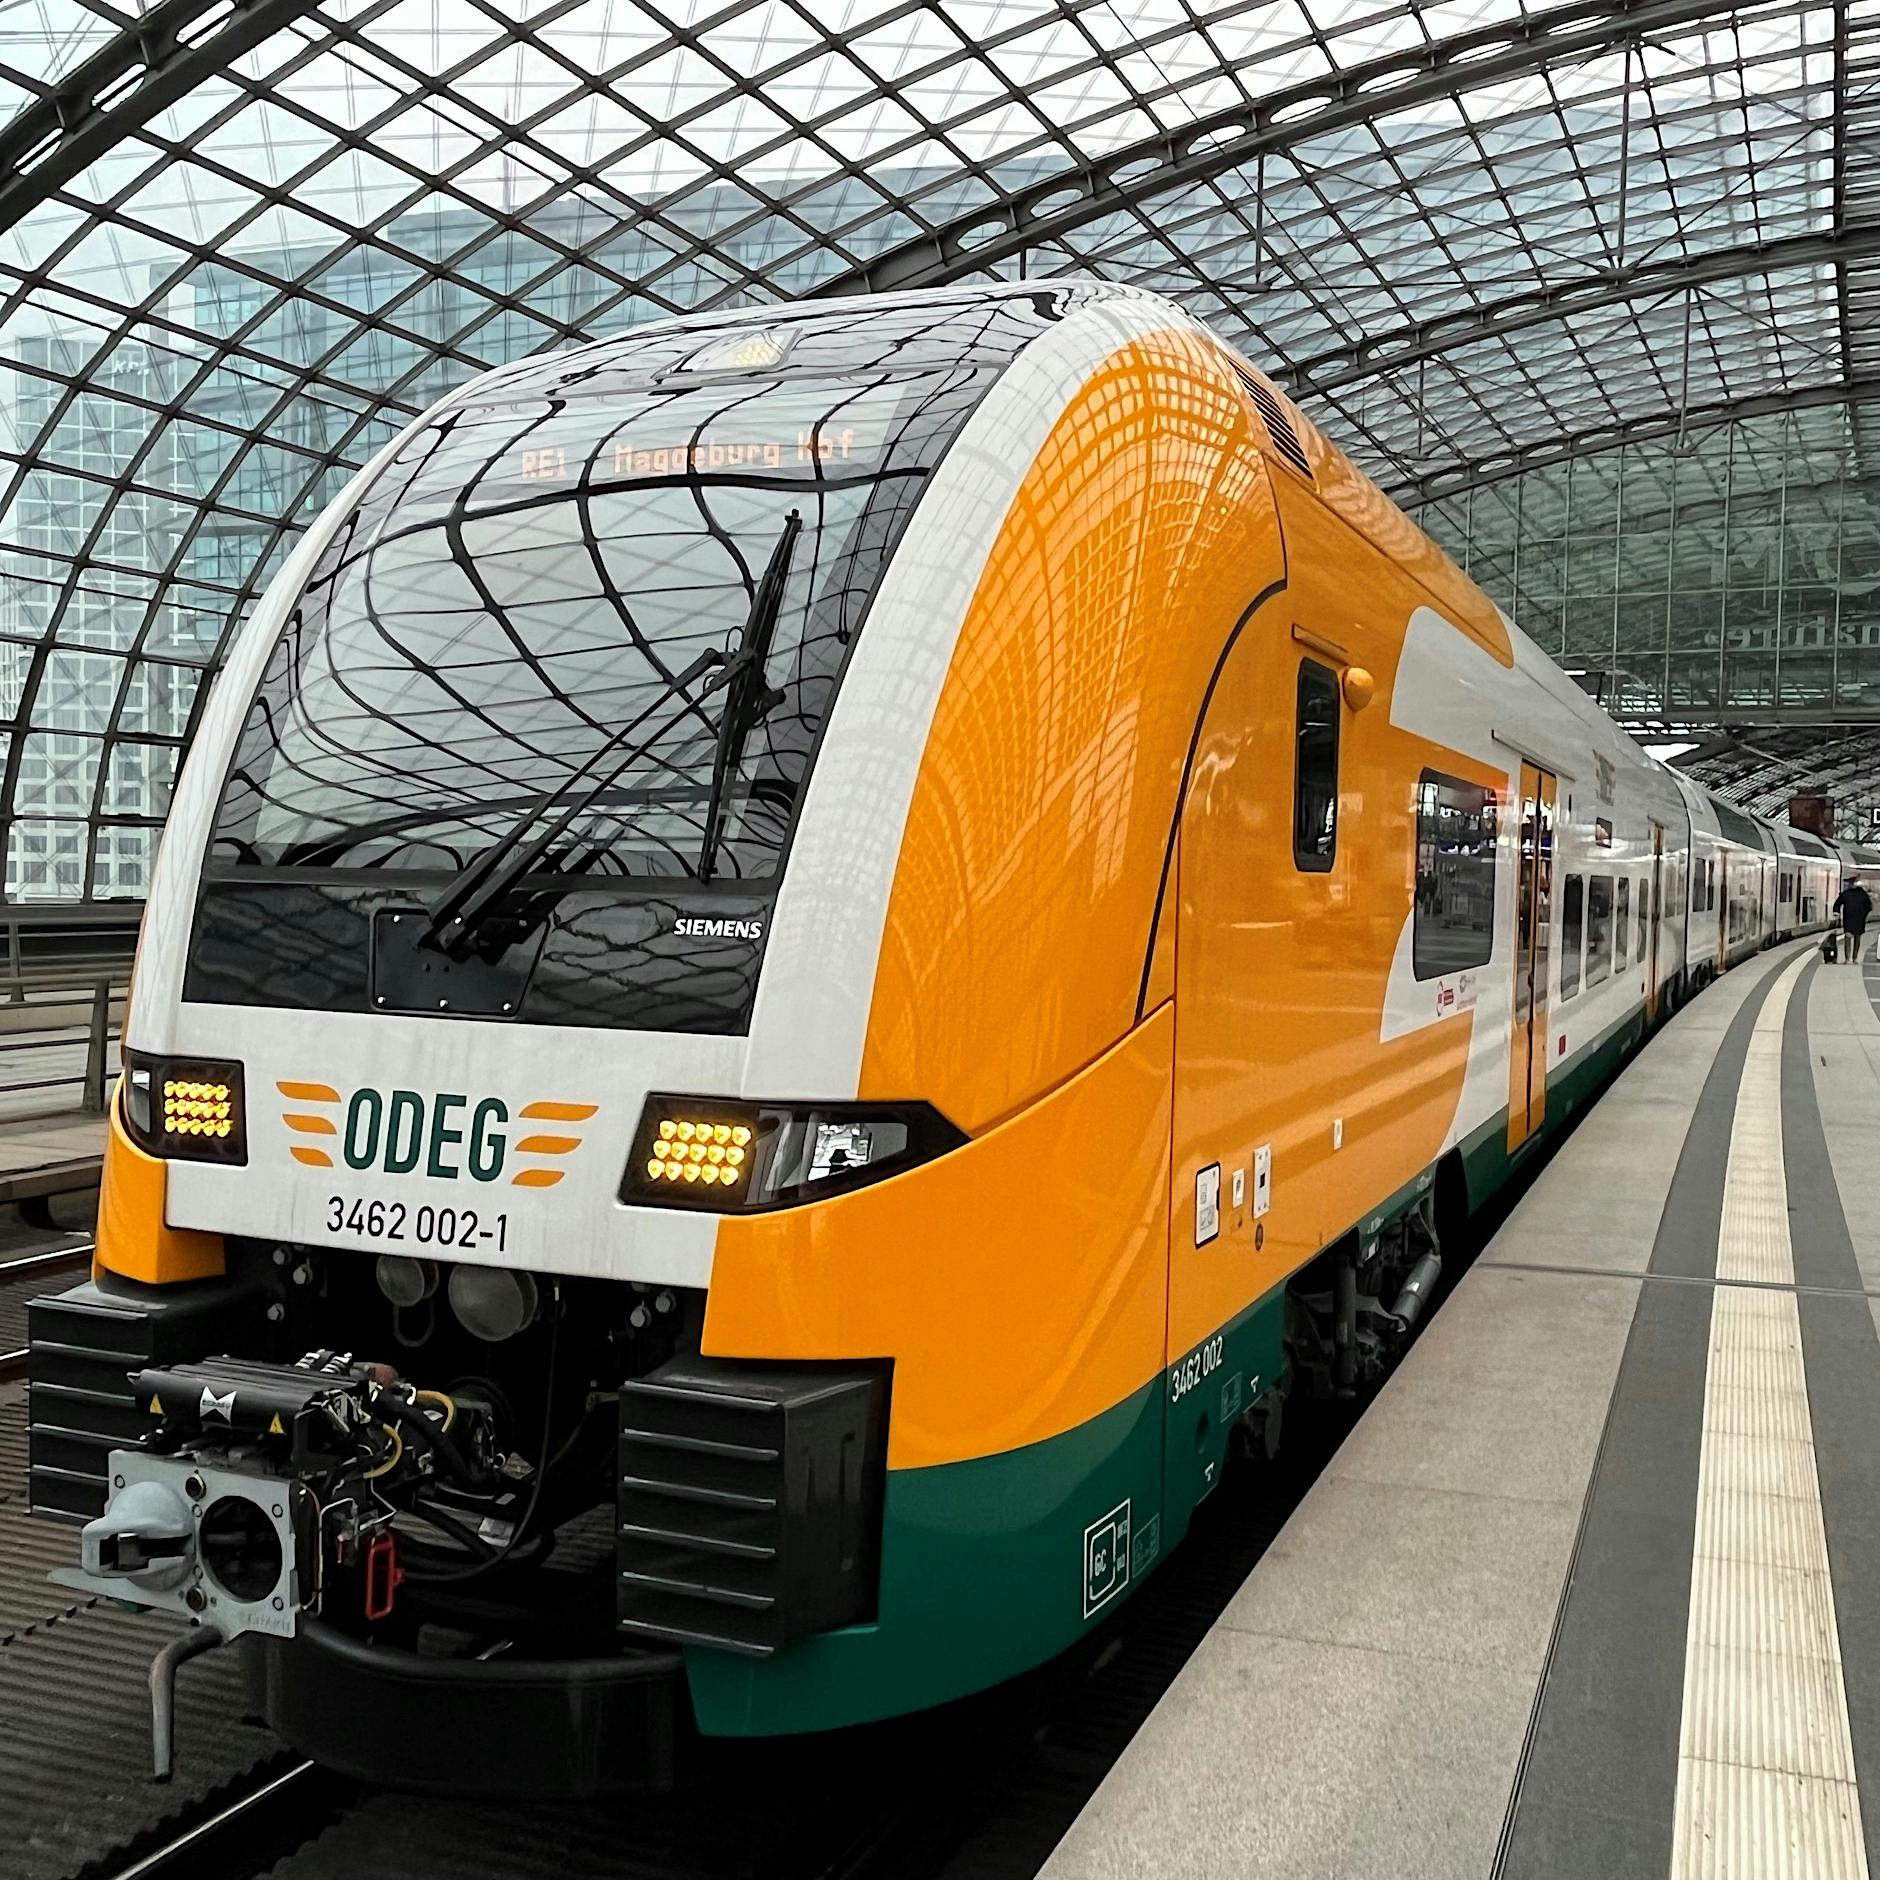 Brandbrief an die DB: Ostdeutsche Eisenbahn (Odeg) fühlt sich diskriminiert